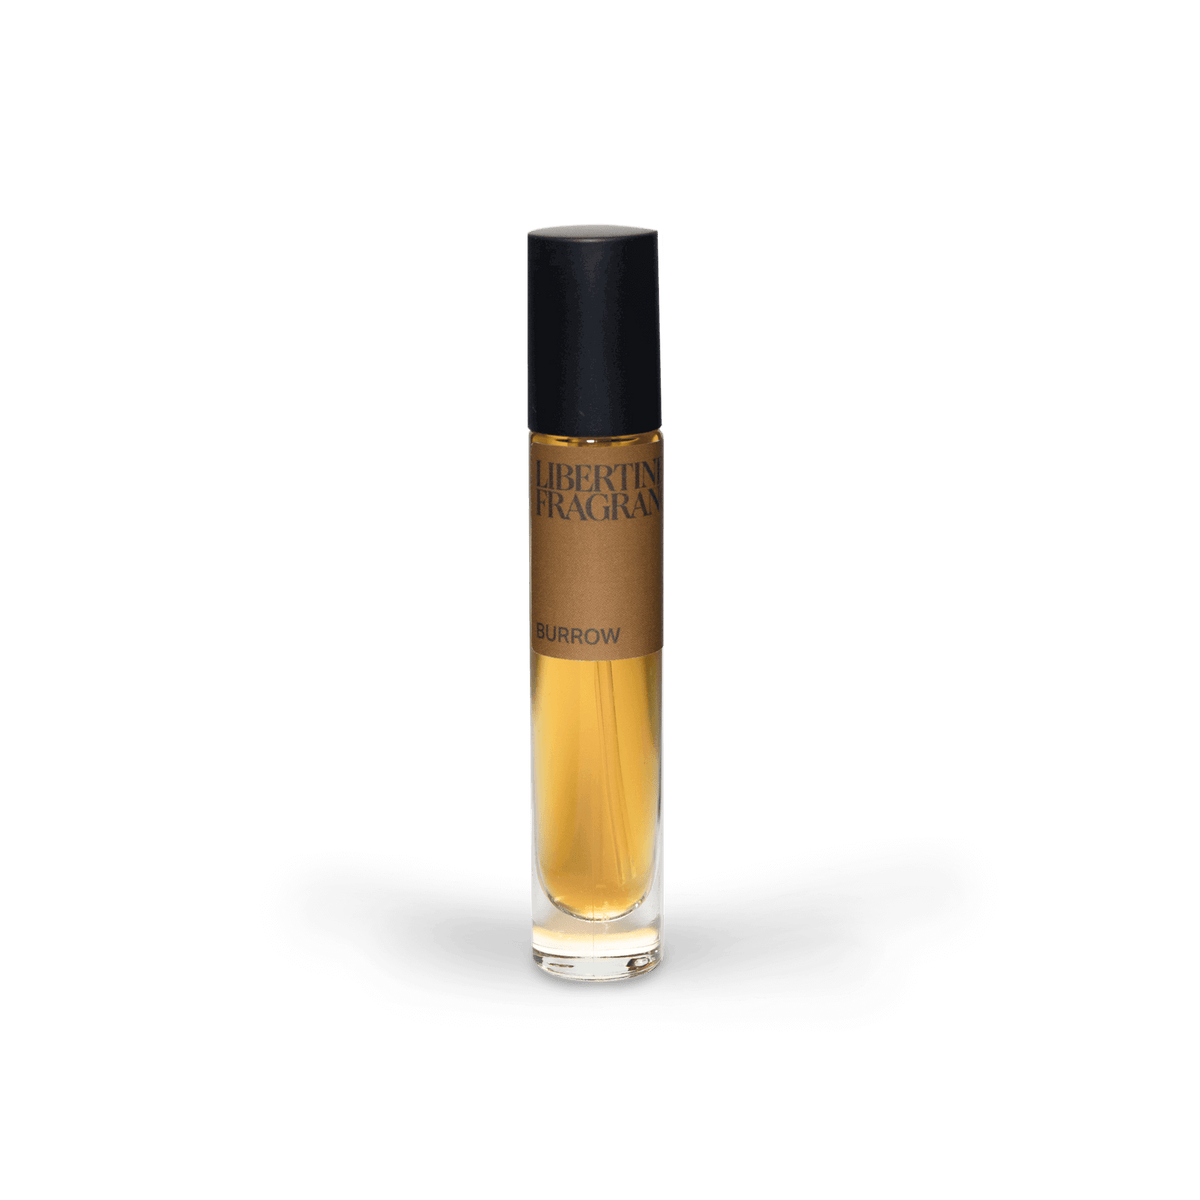 Smokey Travel perfume in tall bottle